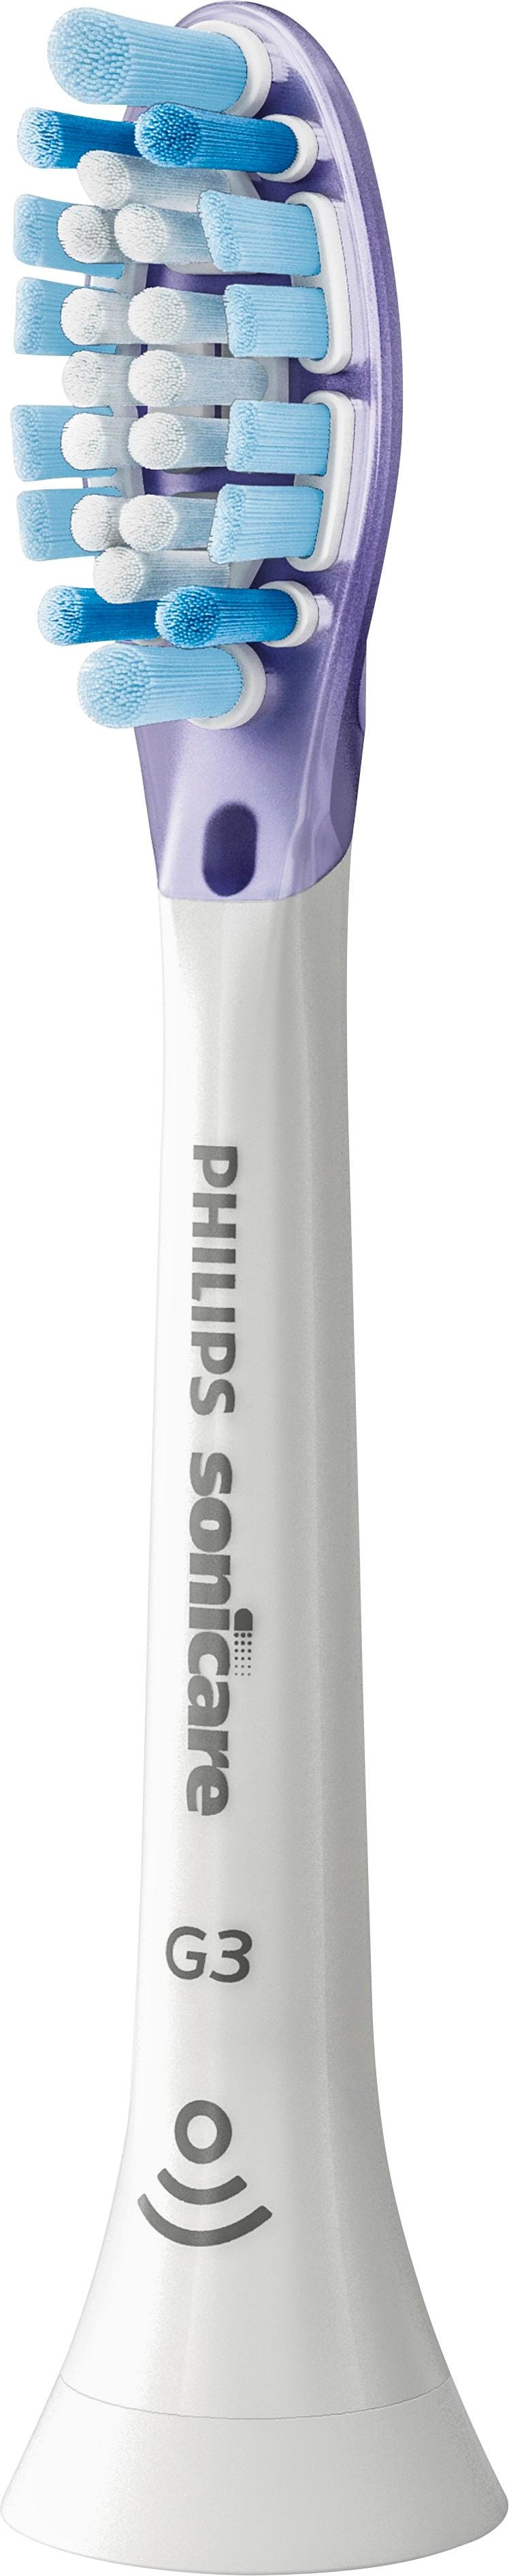 Philips Sonicare - Premium Gum Care Brush Heads (4-Pack) - White_1